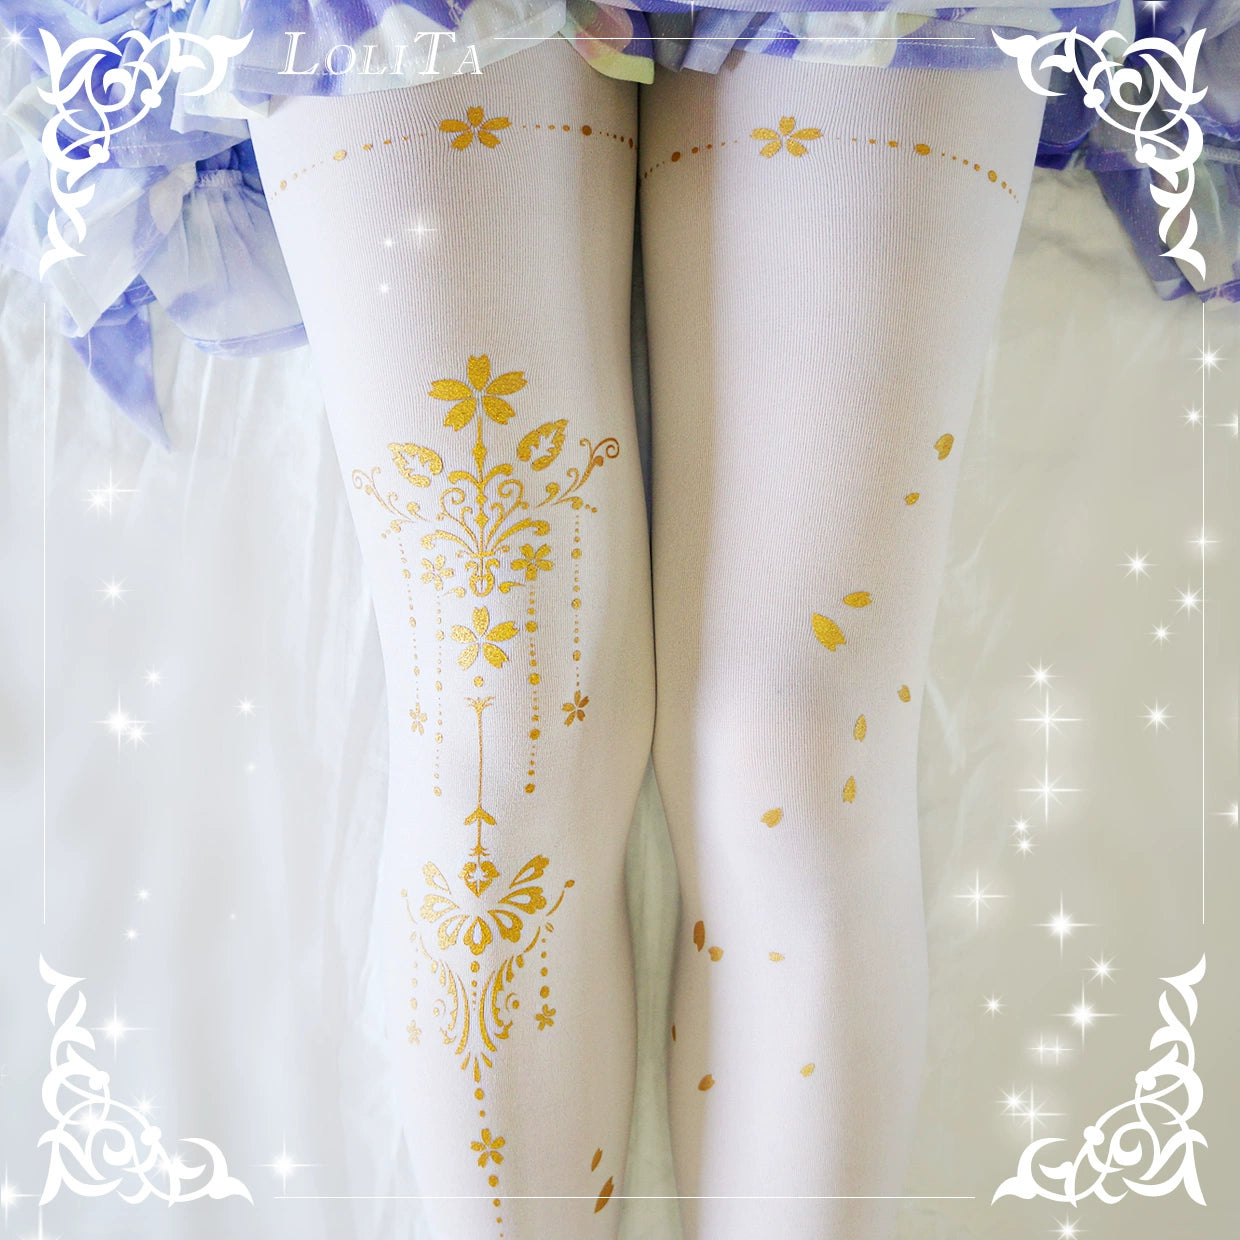 Wulala Mew~Kawaii Lolita Pantyhose Cute Print Lolita Stockings Free size White - cherry blossom flapping print 